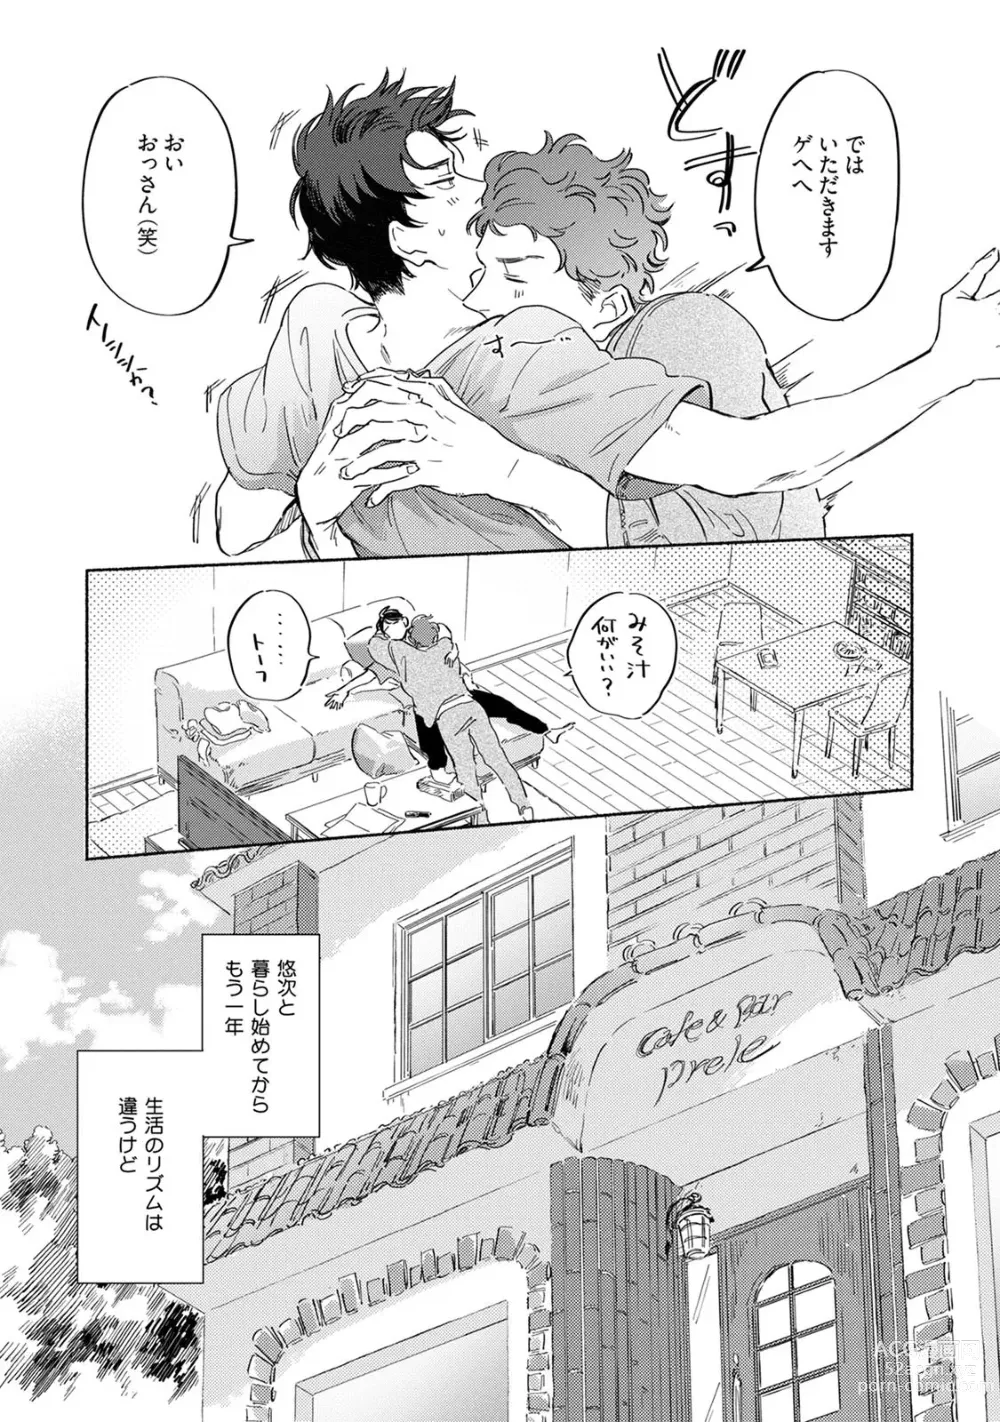 Page 7 of manga Kogarete Kogashite 2